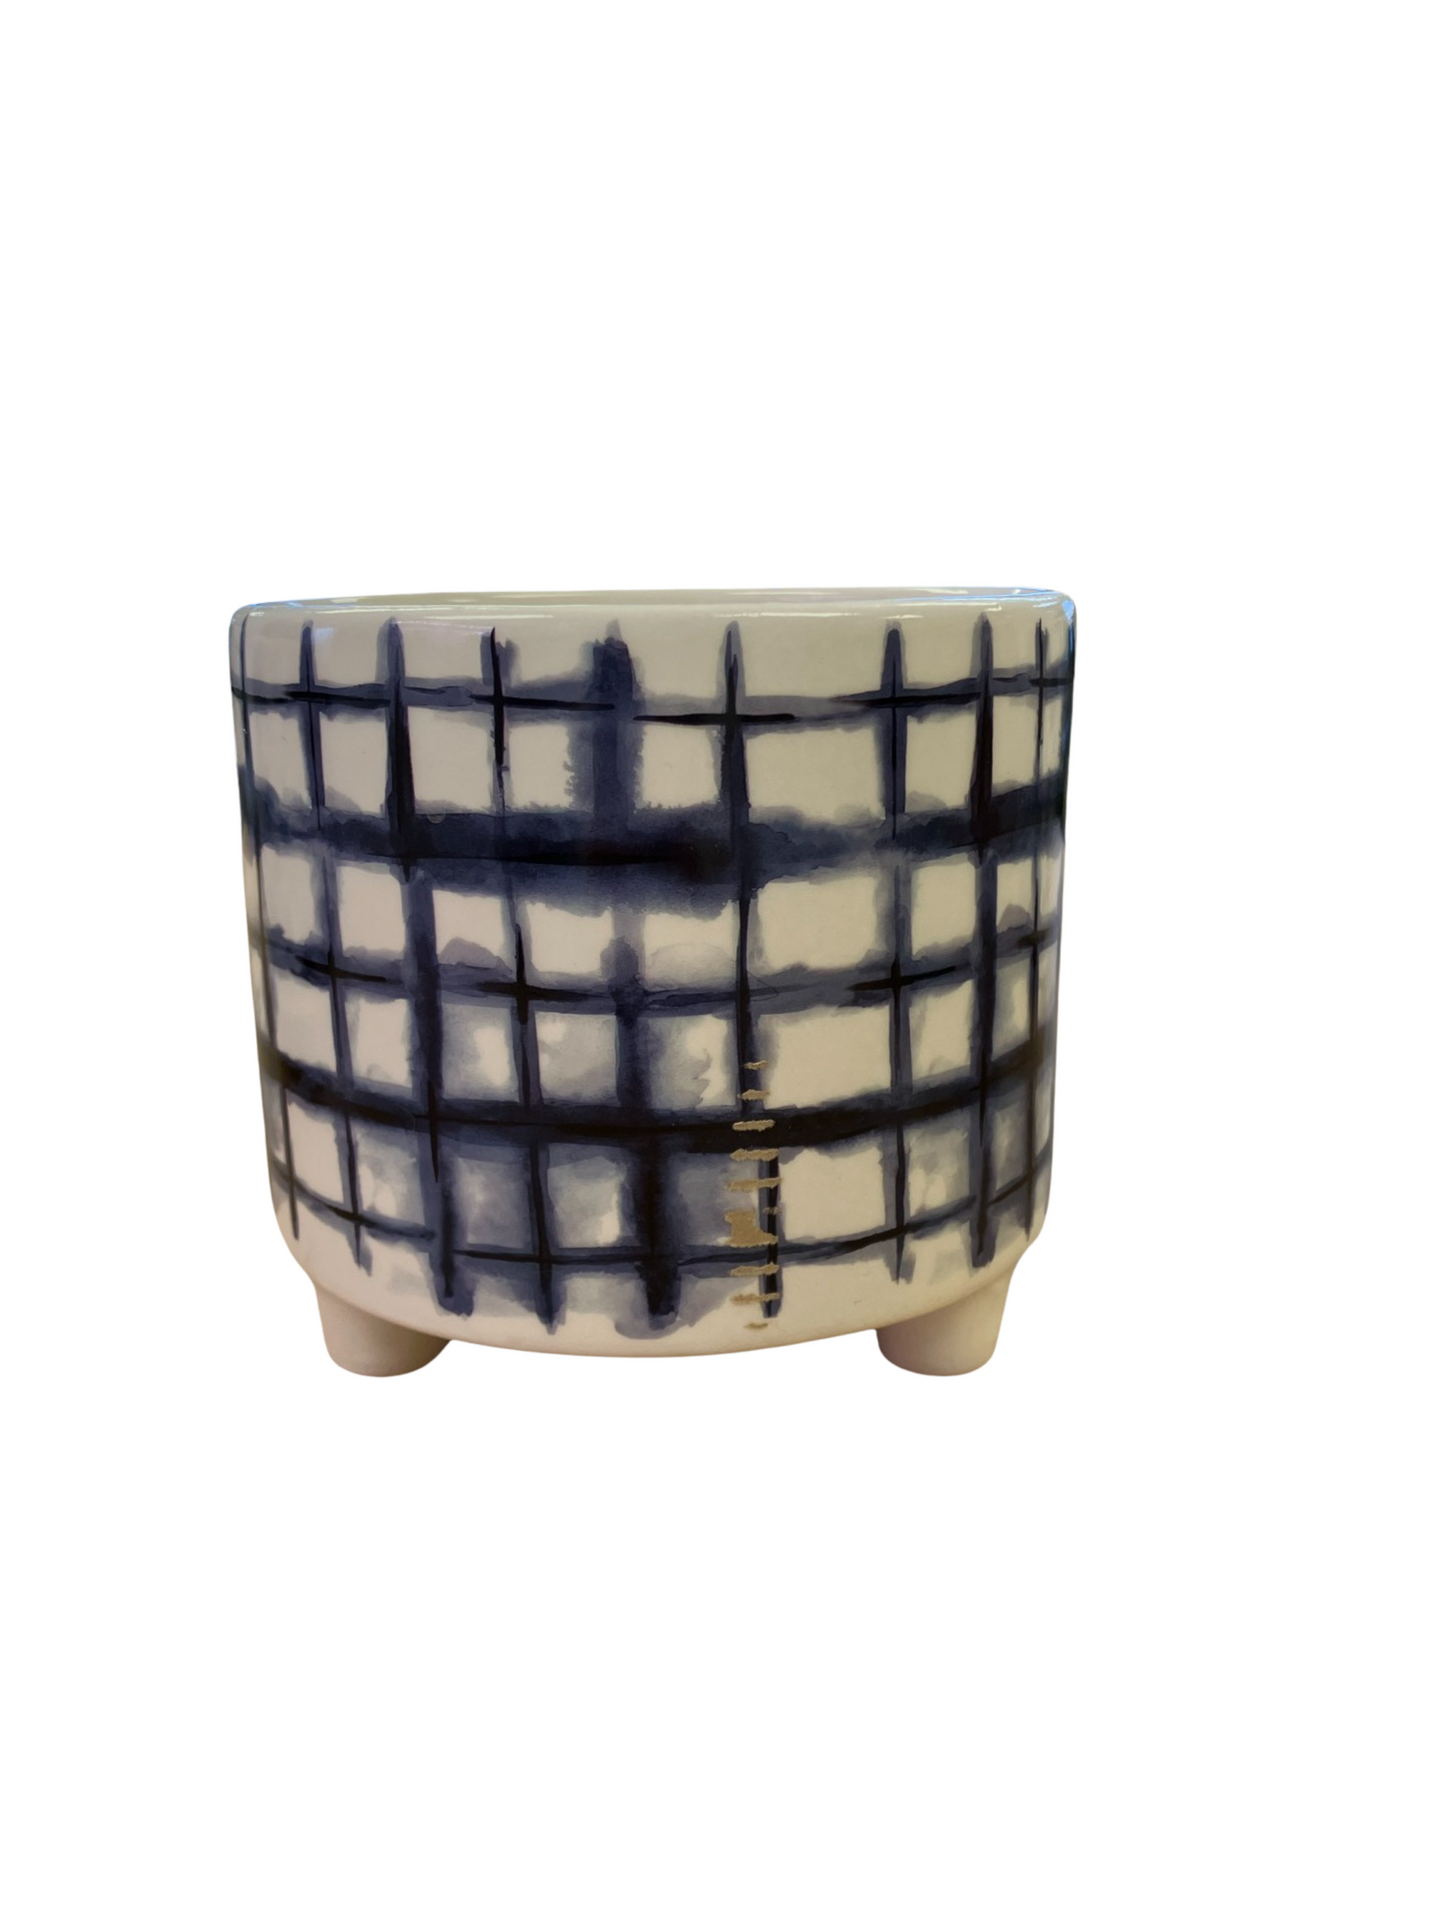 Ceramic Cache Pot - Blue/White Pattern - 5" - 3 Feet